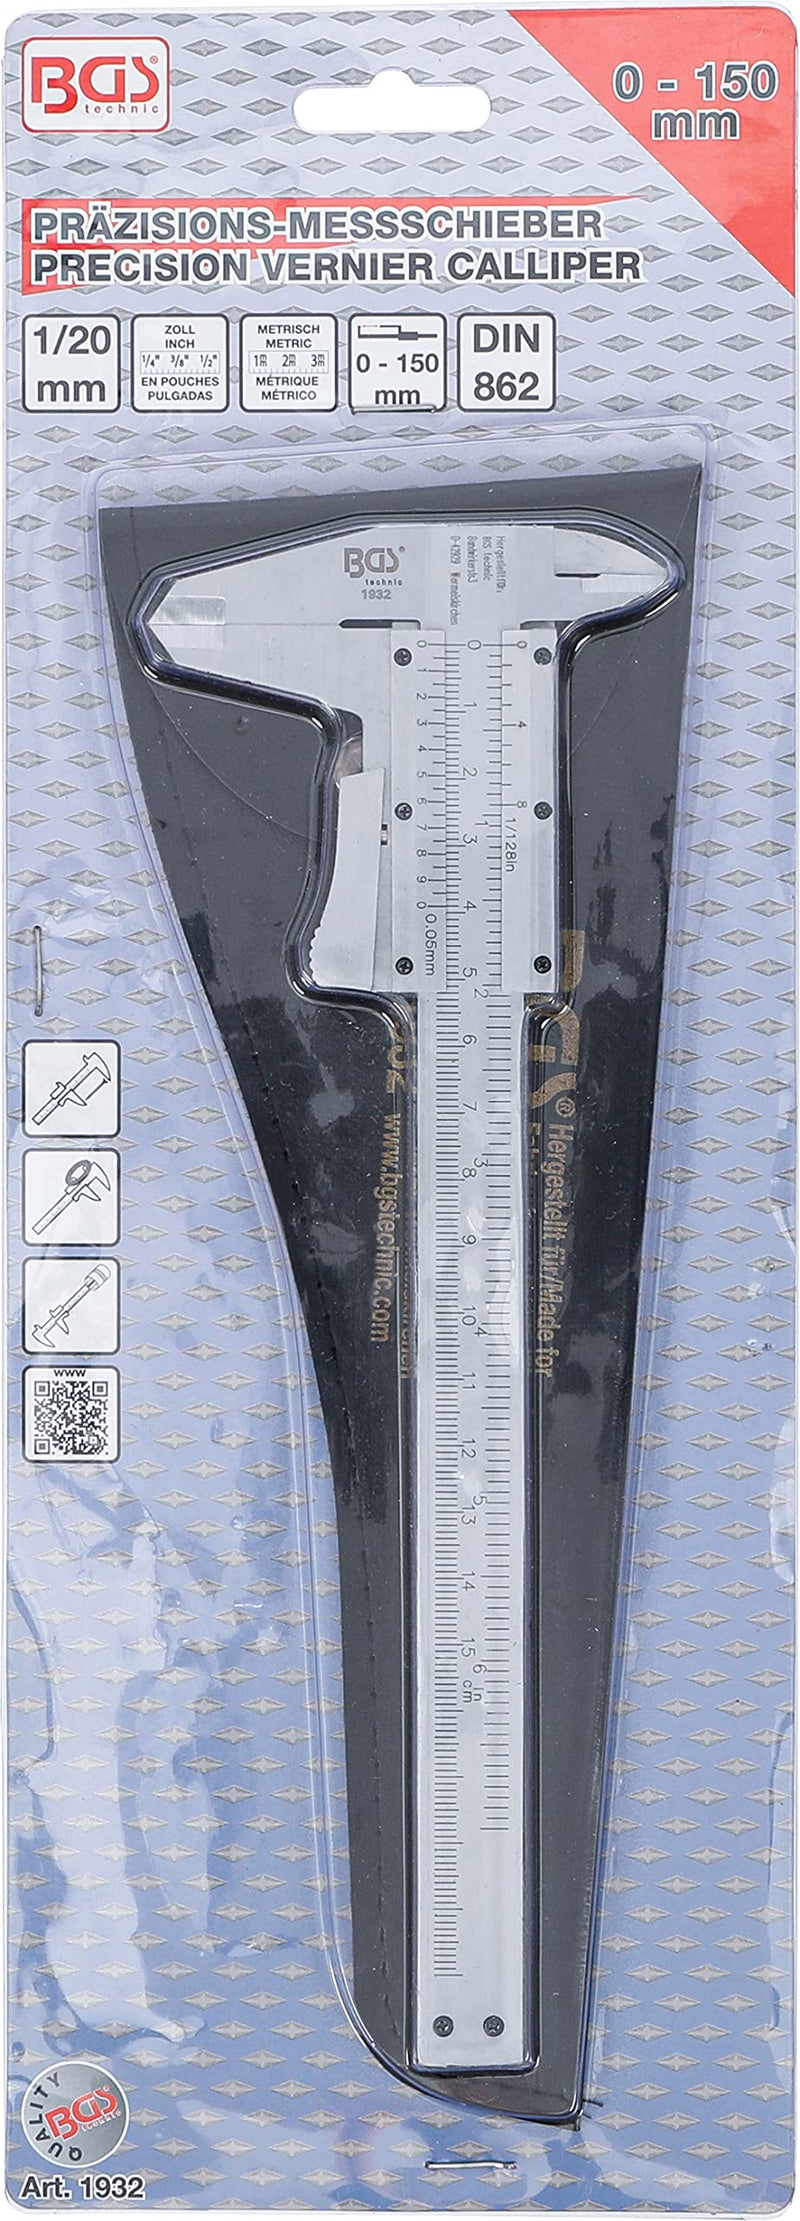  [AUSTRALIA] - BGS 1932 | Precision caliper | 0 - 150mm | mm + inches | Vernier 1/20 mm | Includes faux leather bag